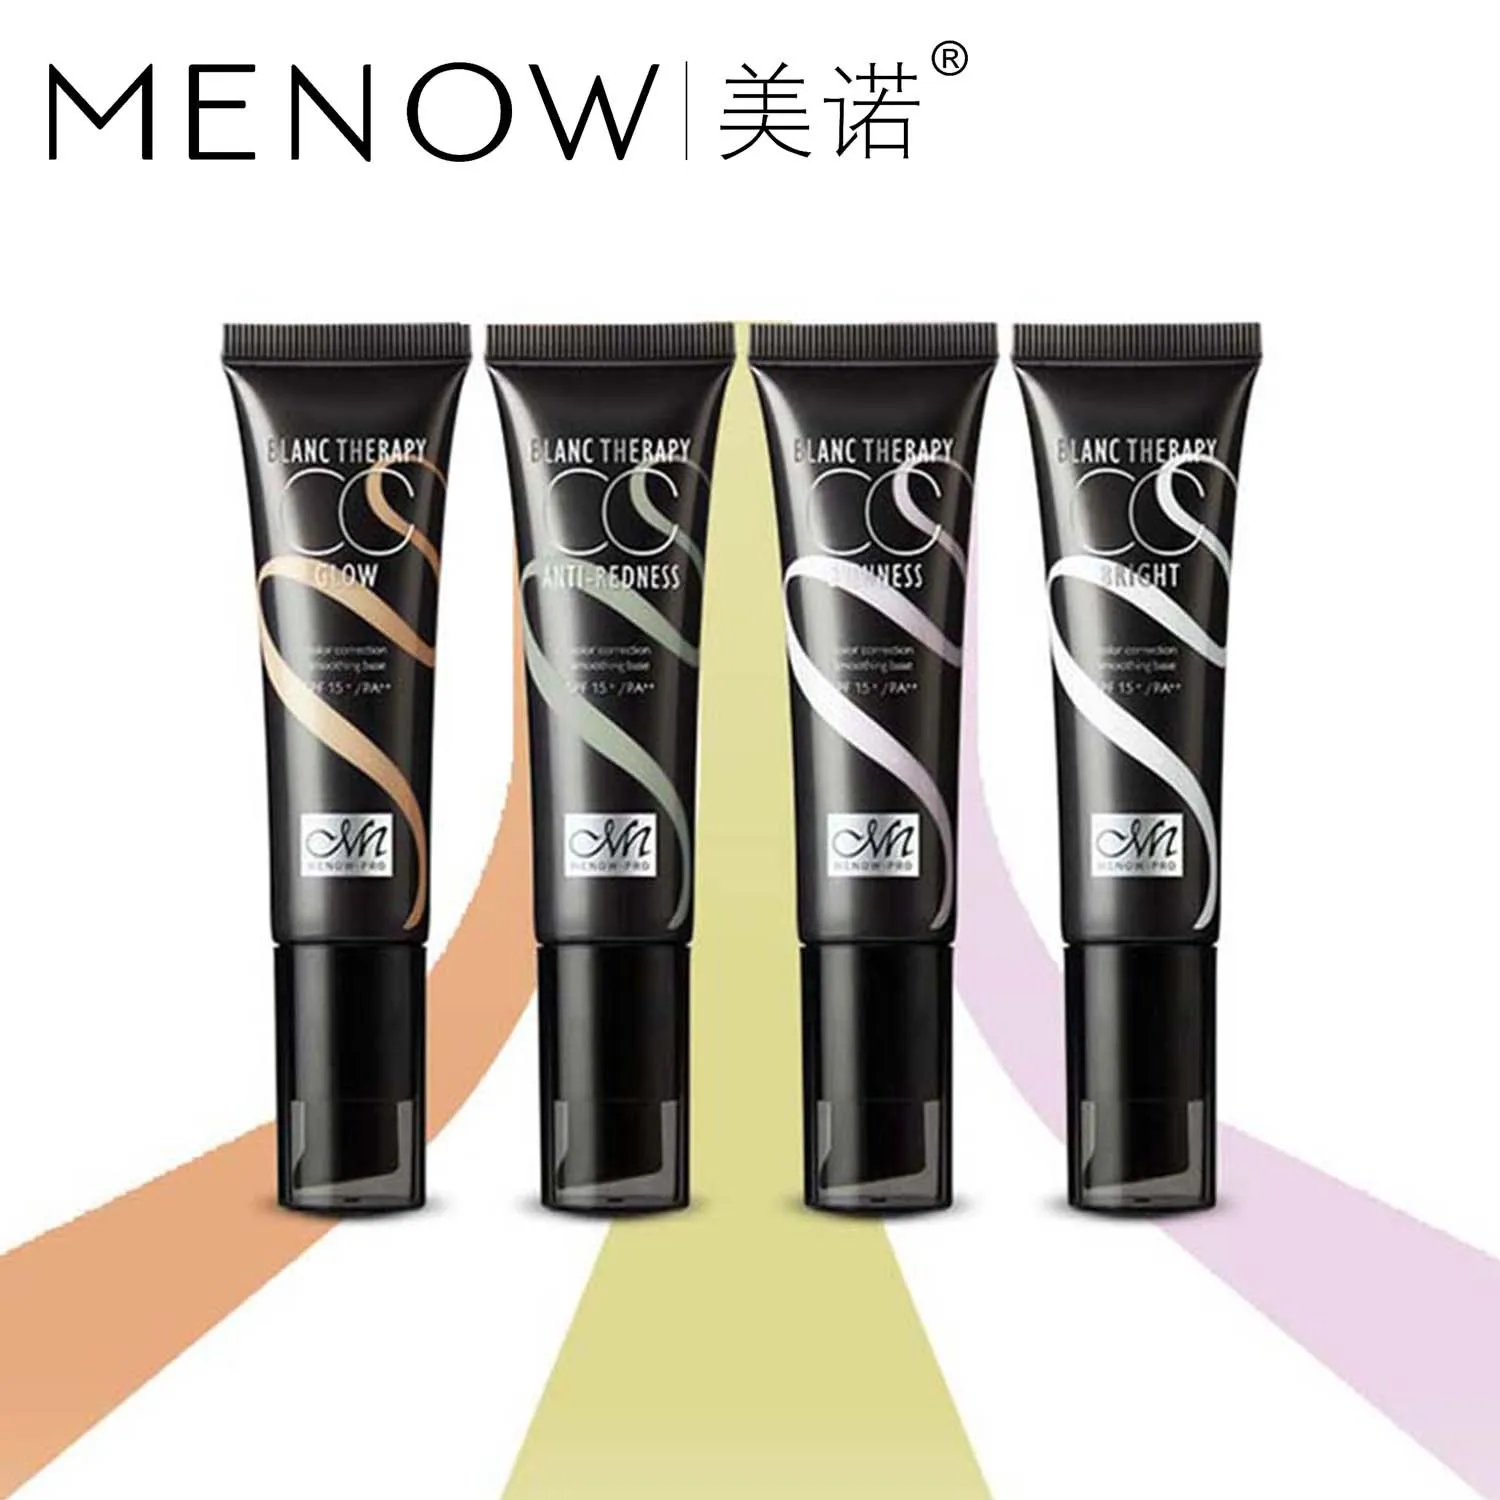 MENOW Марка Водонепроницаемый Основа для макияжа лица Защита от солнца Блок Защита от солнца экран CC крем легко носить и осветляет кожу